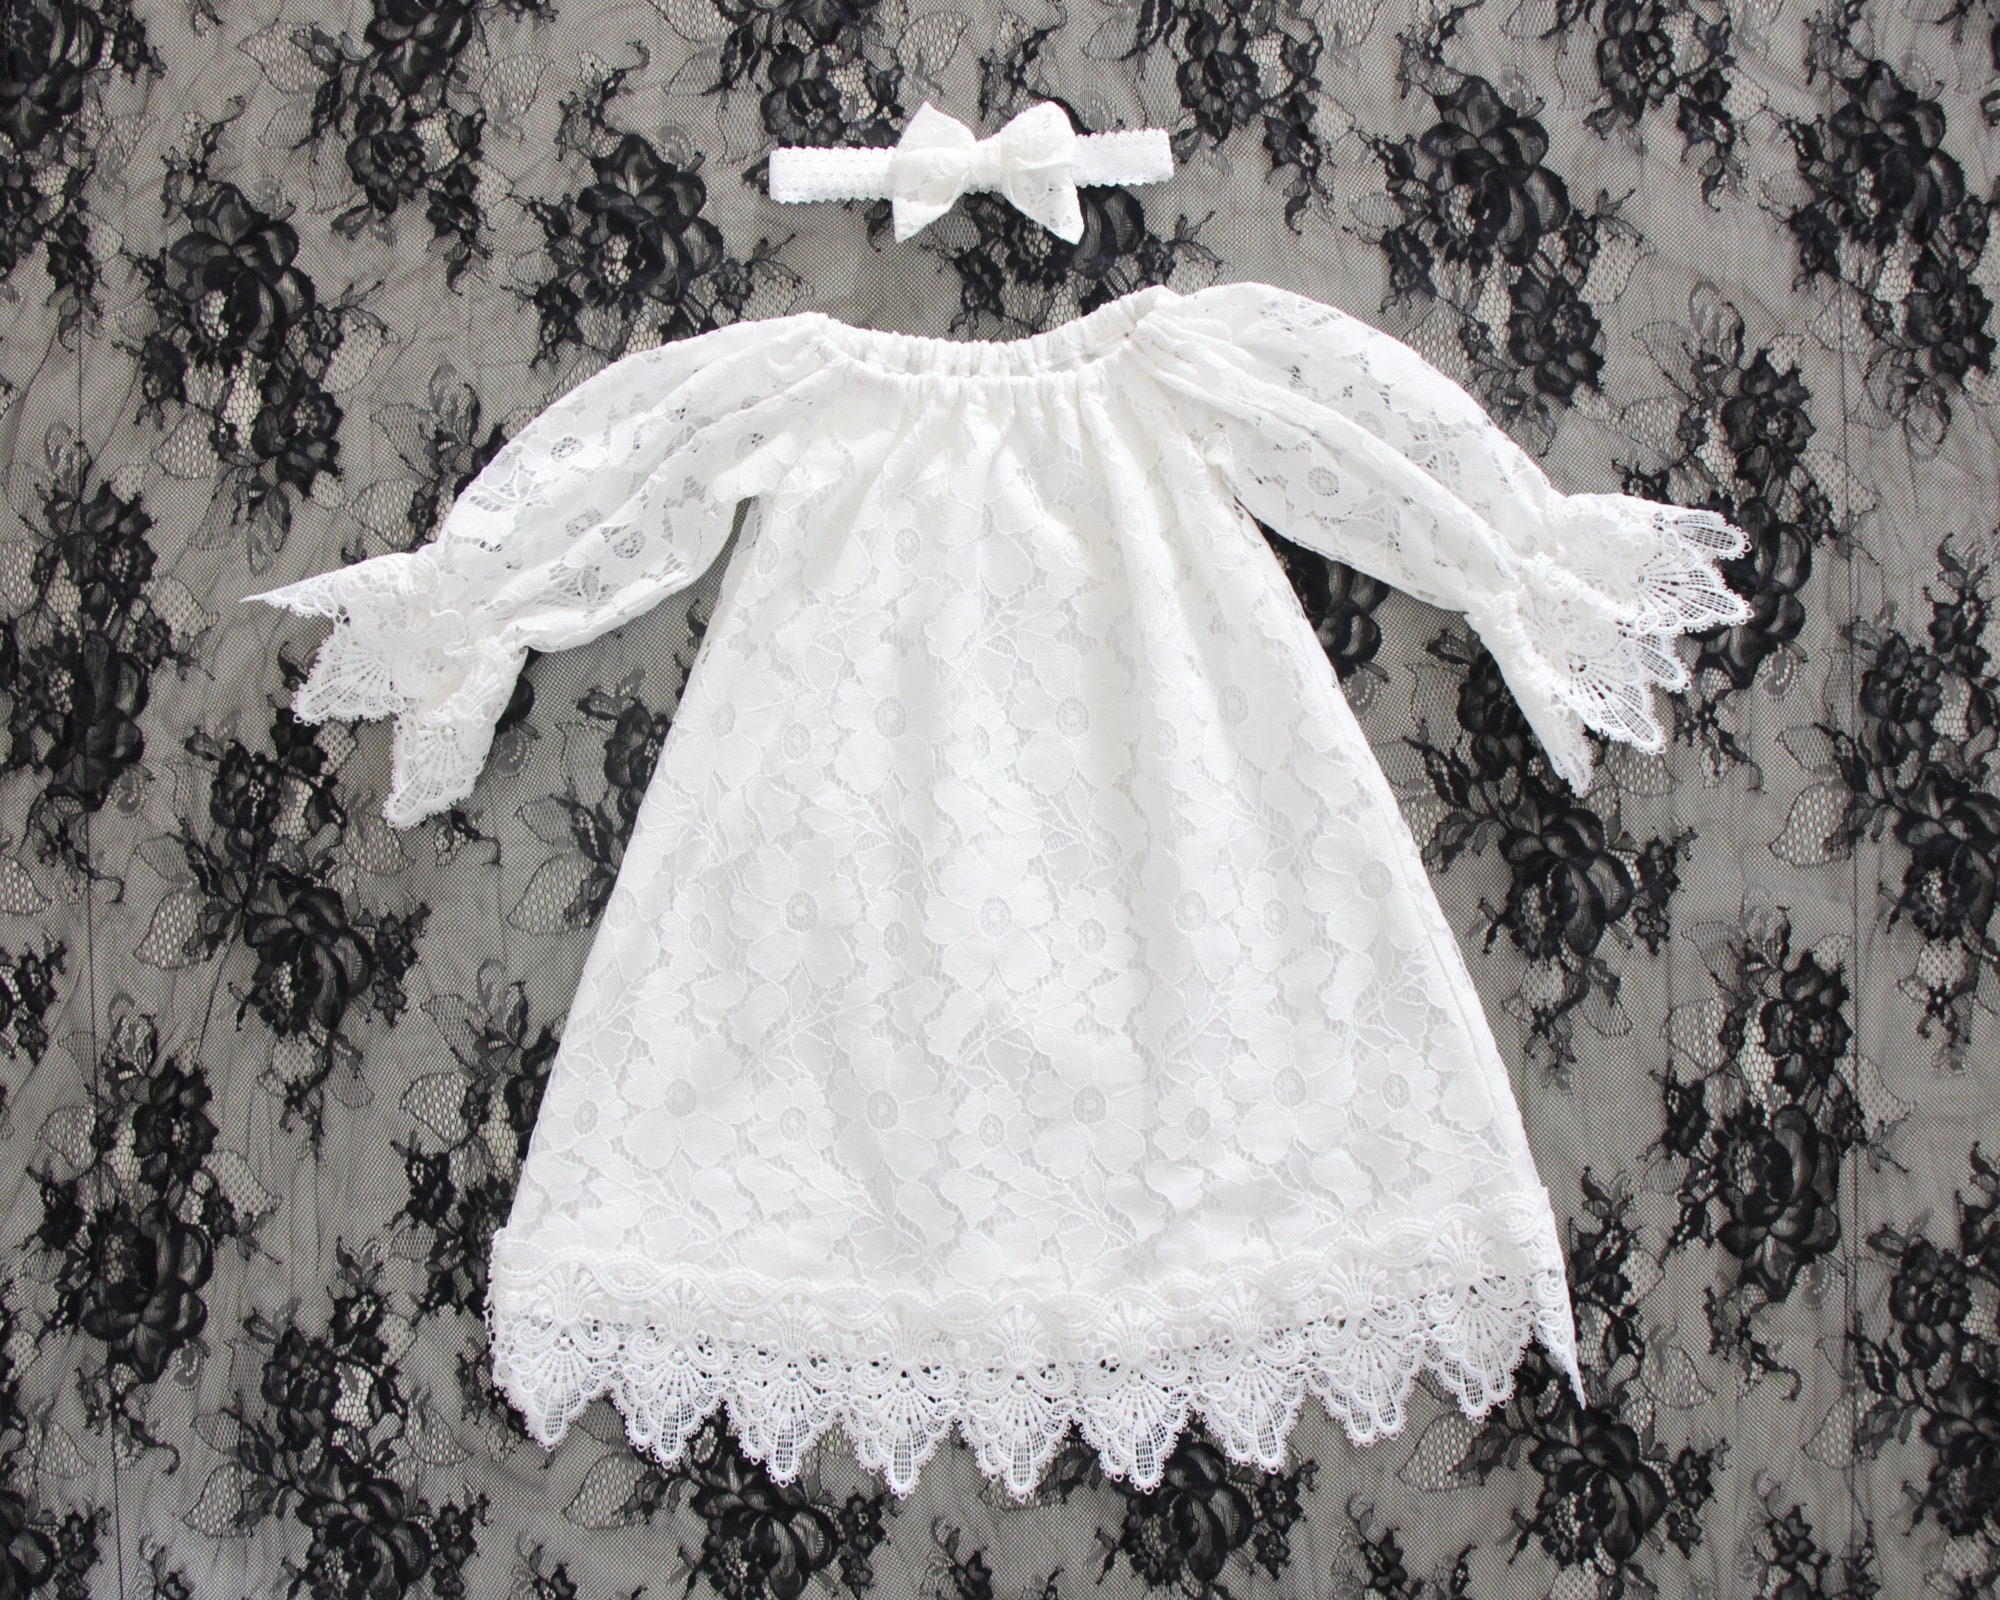 Long sleeve lace baptism dress baptism dress for baby | Etsy